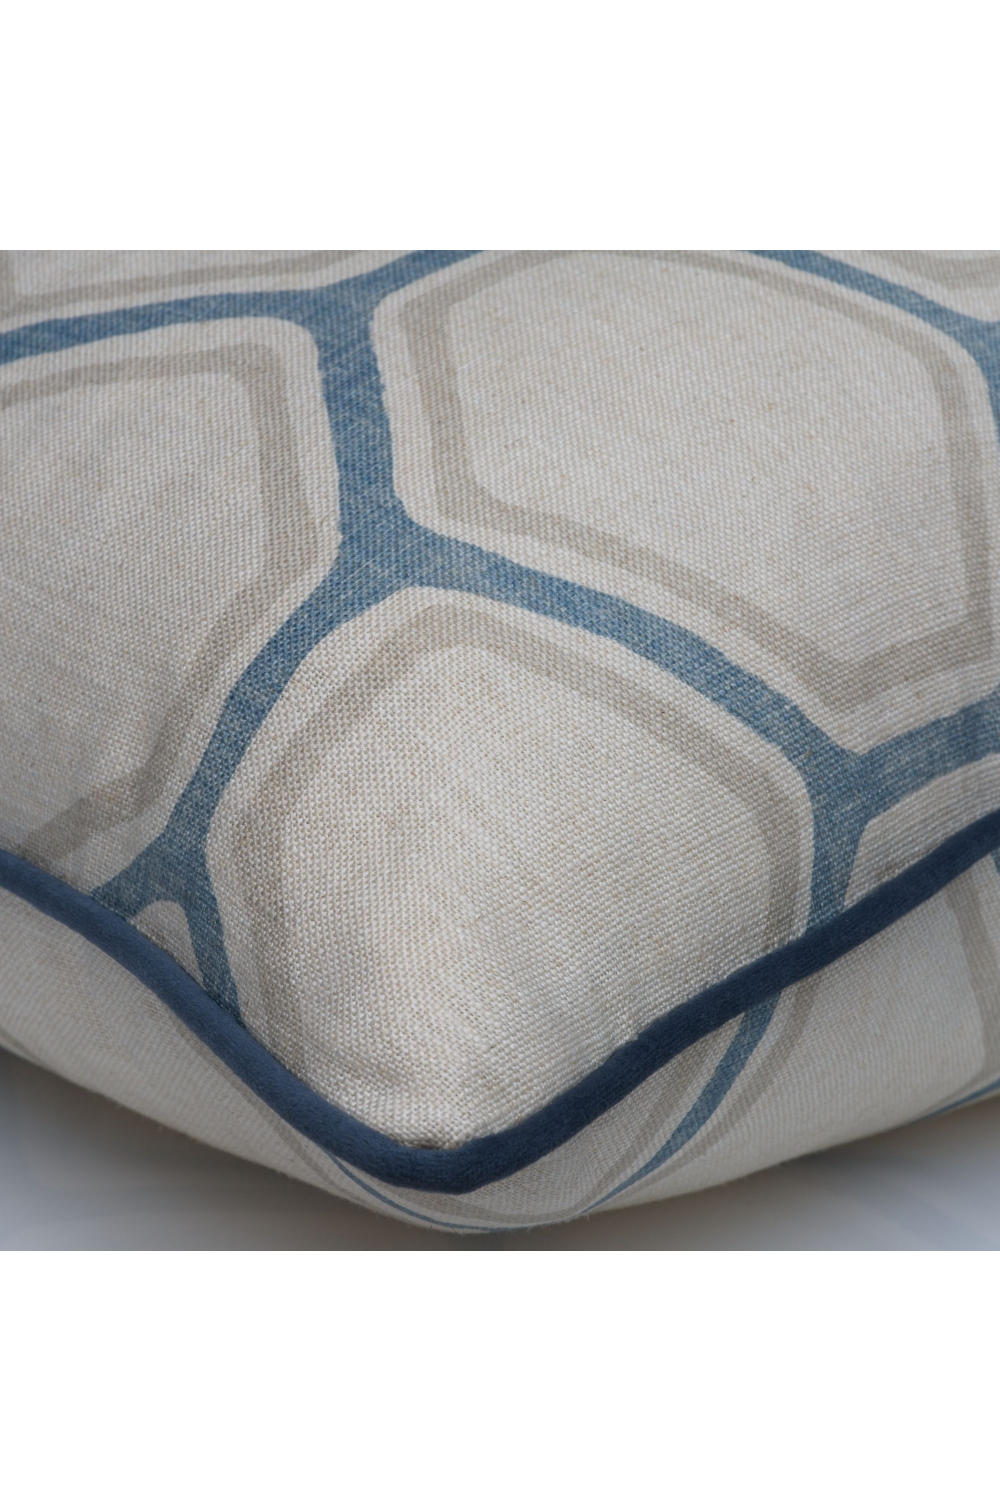 Honeycomb Linen Cushion | Andrew Martin Pergola | Oroa.com